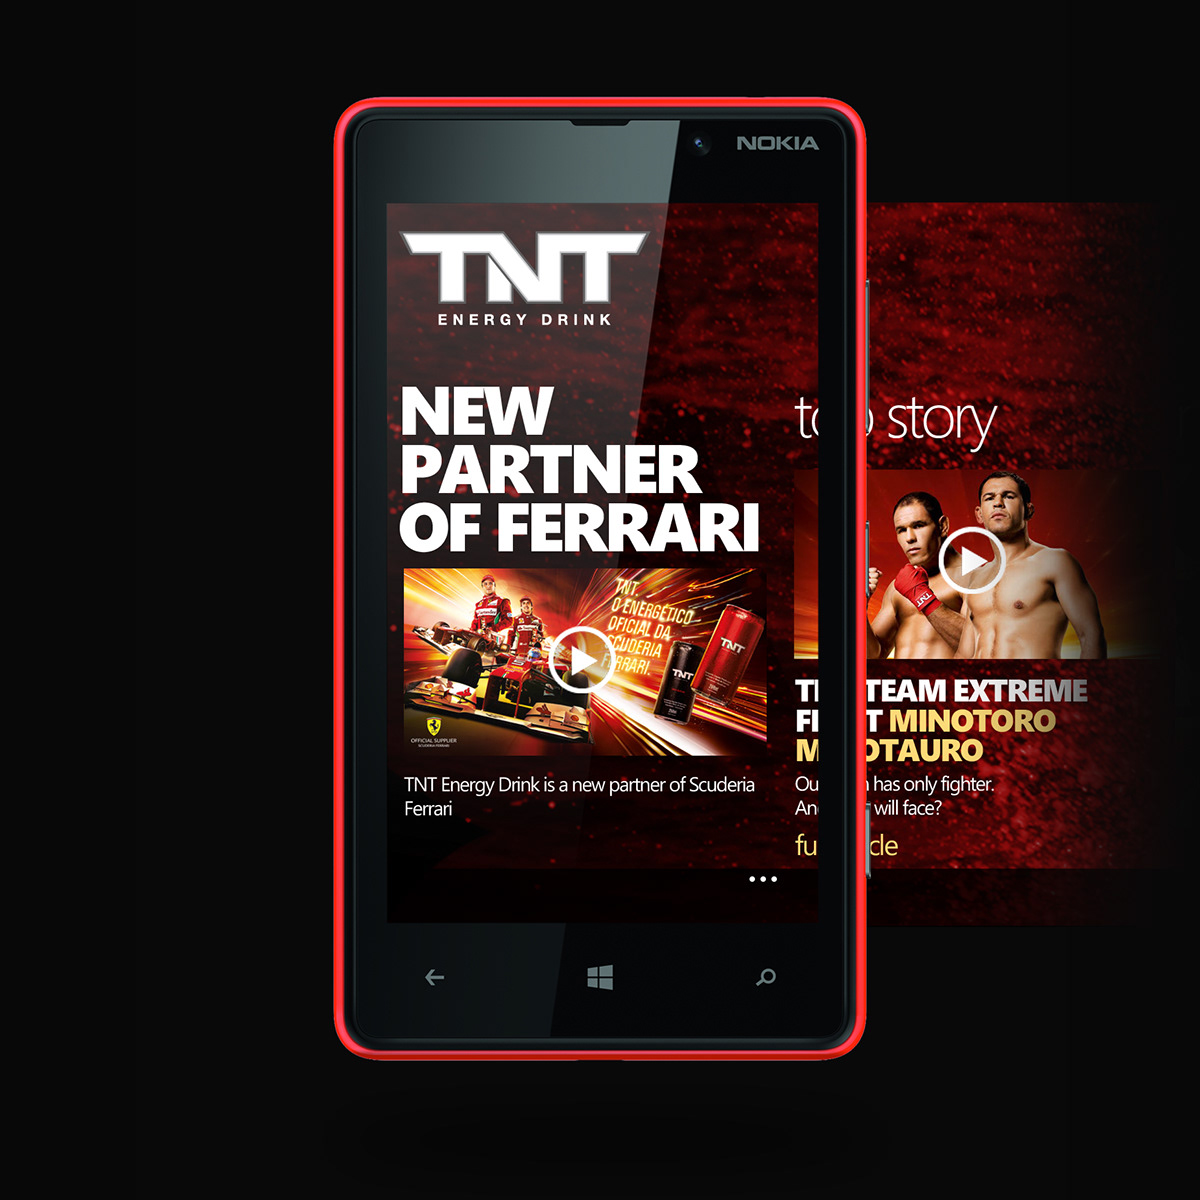 TNT TNT Energy Drink windows phone app interaction